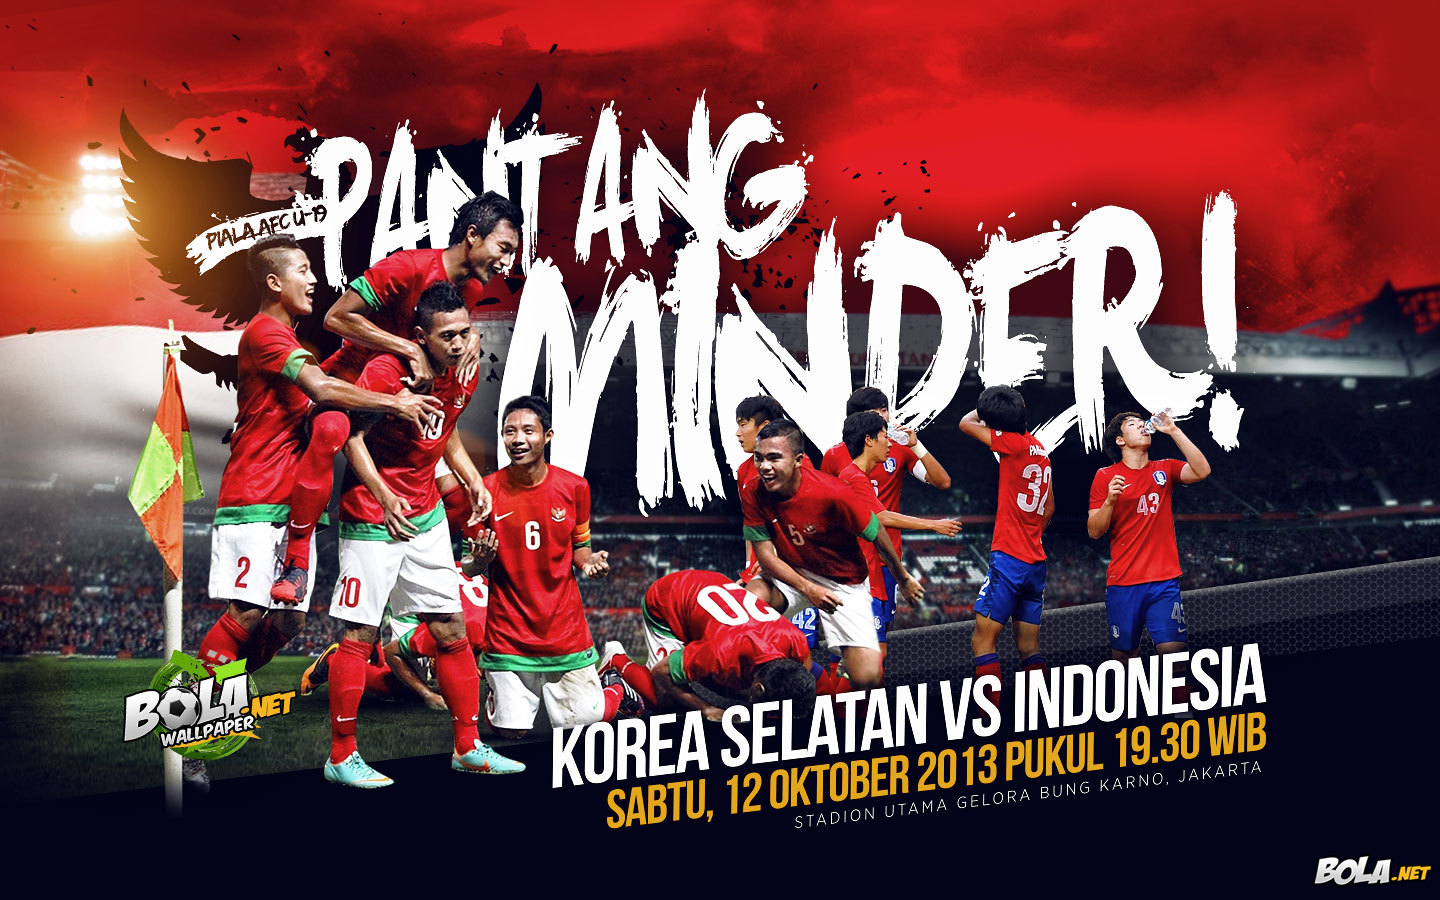 Deskripsi : Wallpaper Afc Cup U19: Korsel Vs Indonesia, size: 1440x900